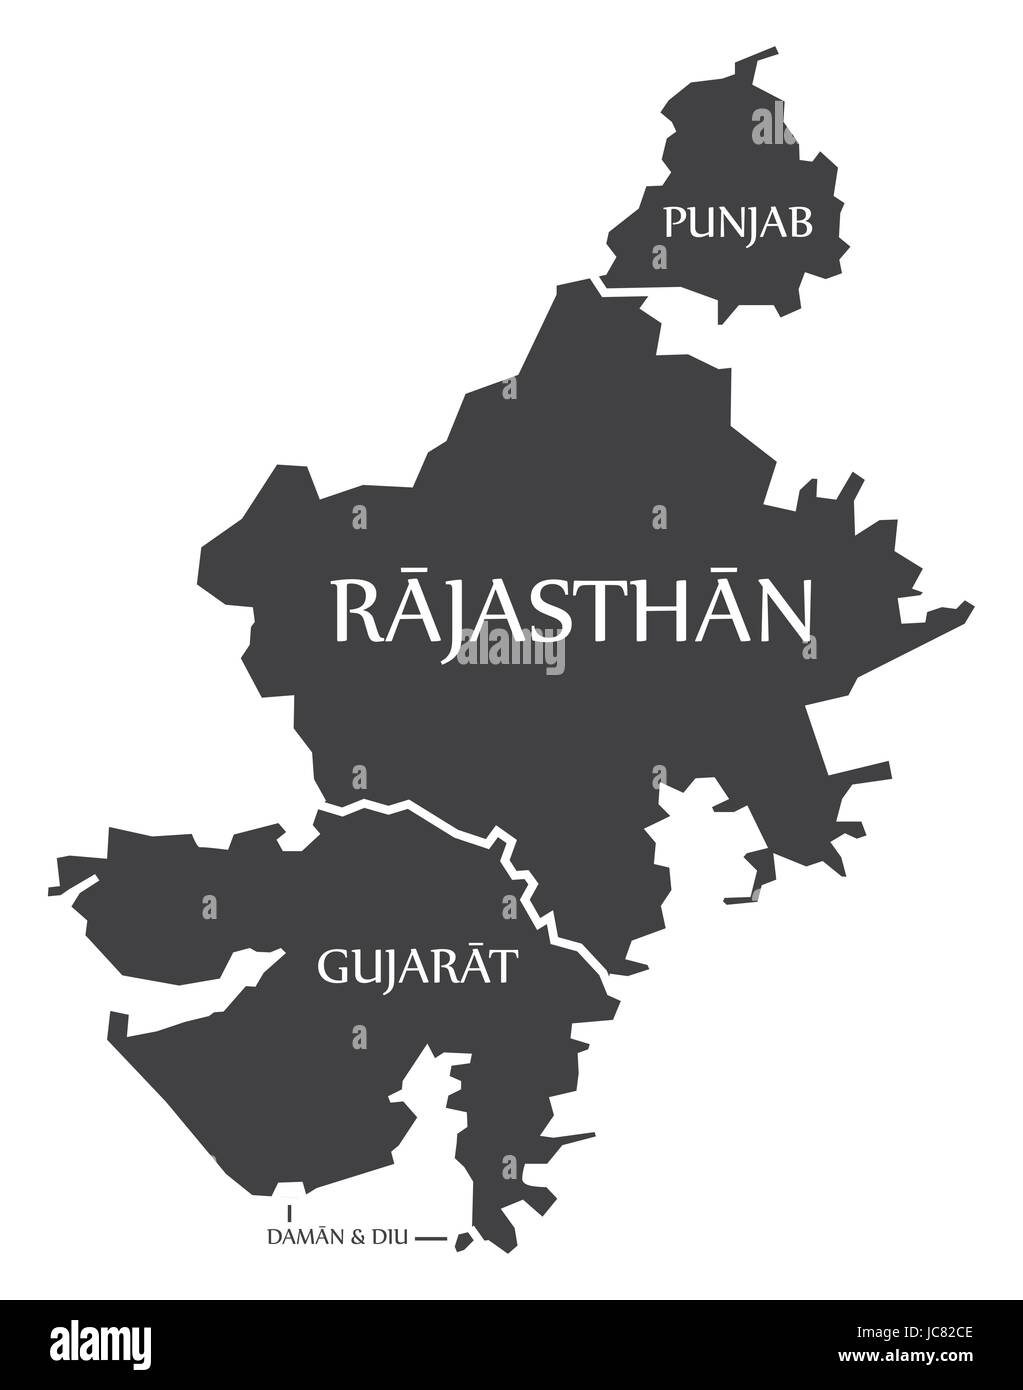 Punjab - Rajasthan - Gujarat - Daman and Diu Map Illustration of Indian states Stock Vector